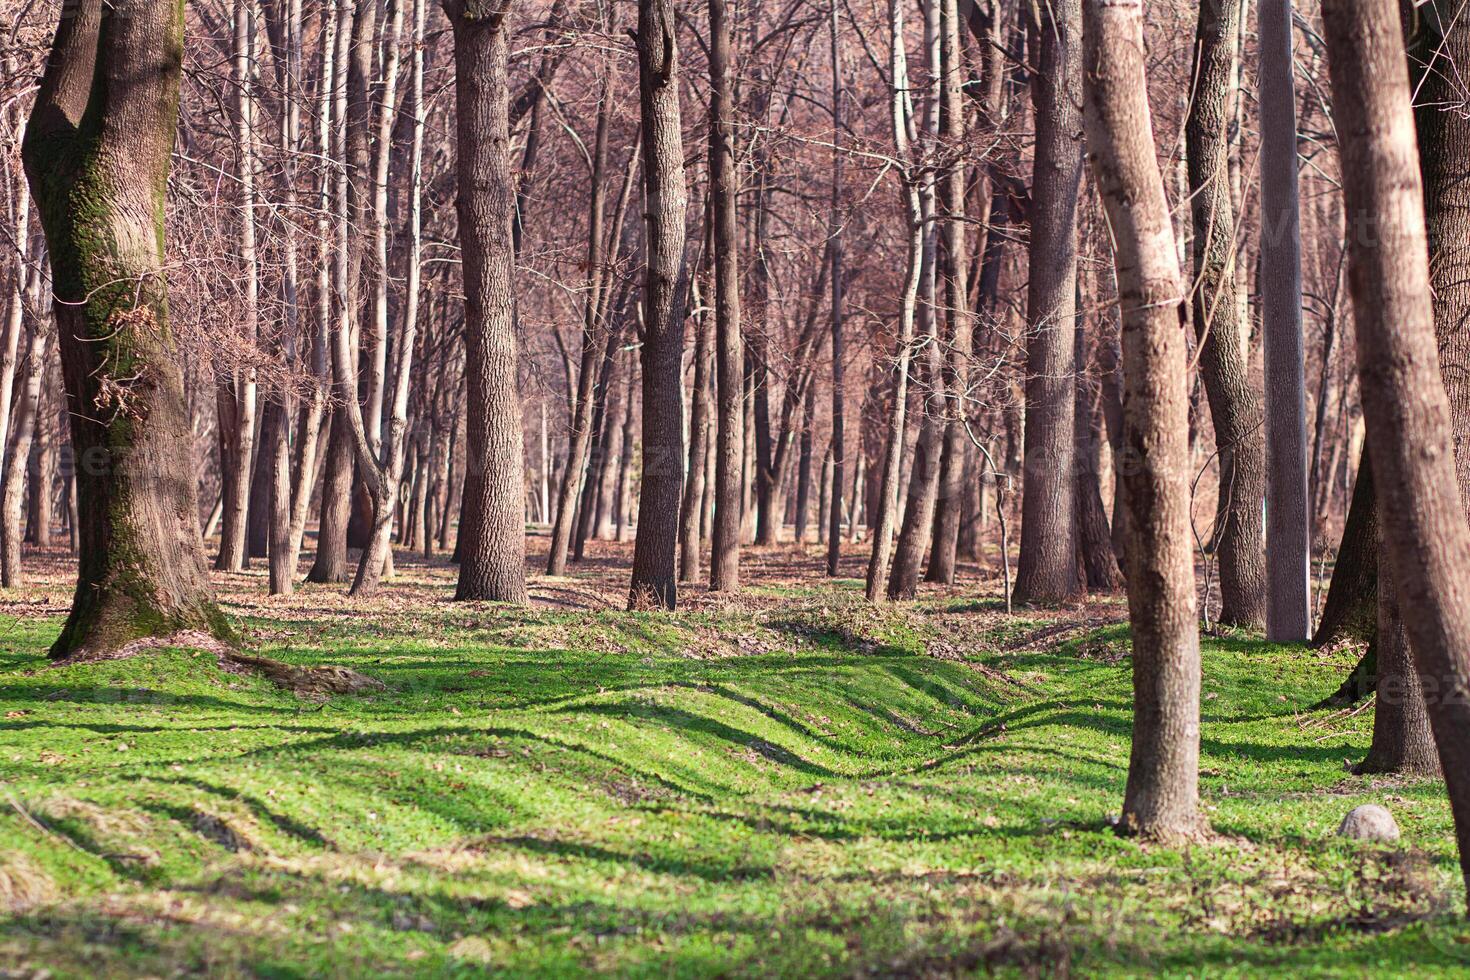 nackt Bäume auf Grün Clearing im Wald oder Park im Frühling oder Herbst. Natur foto